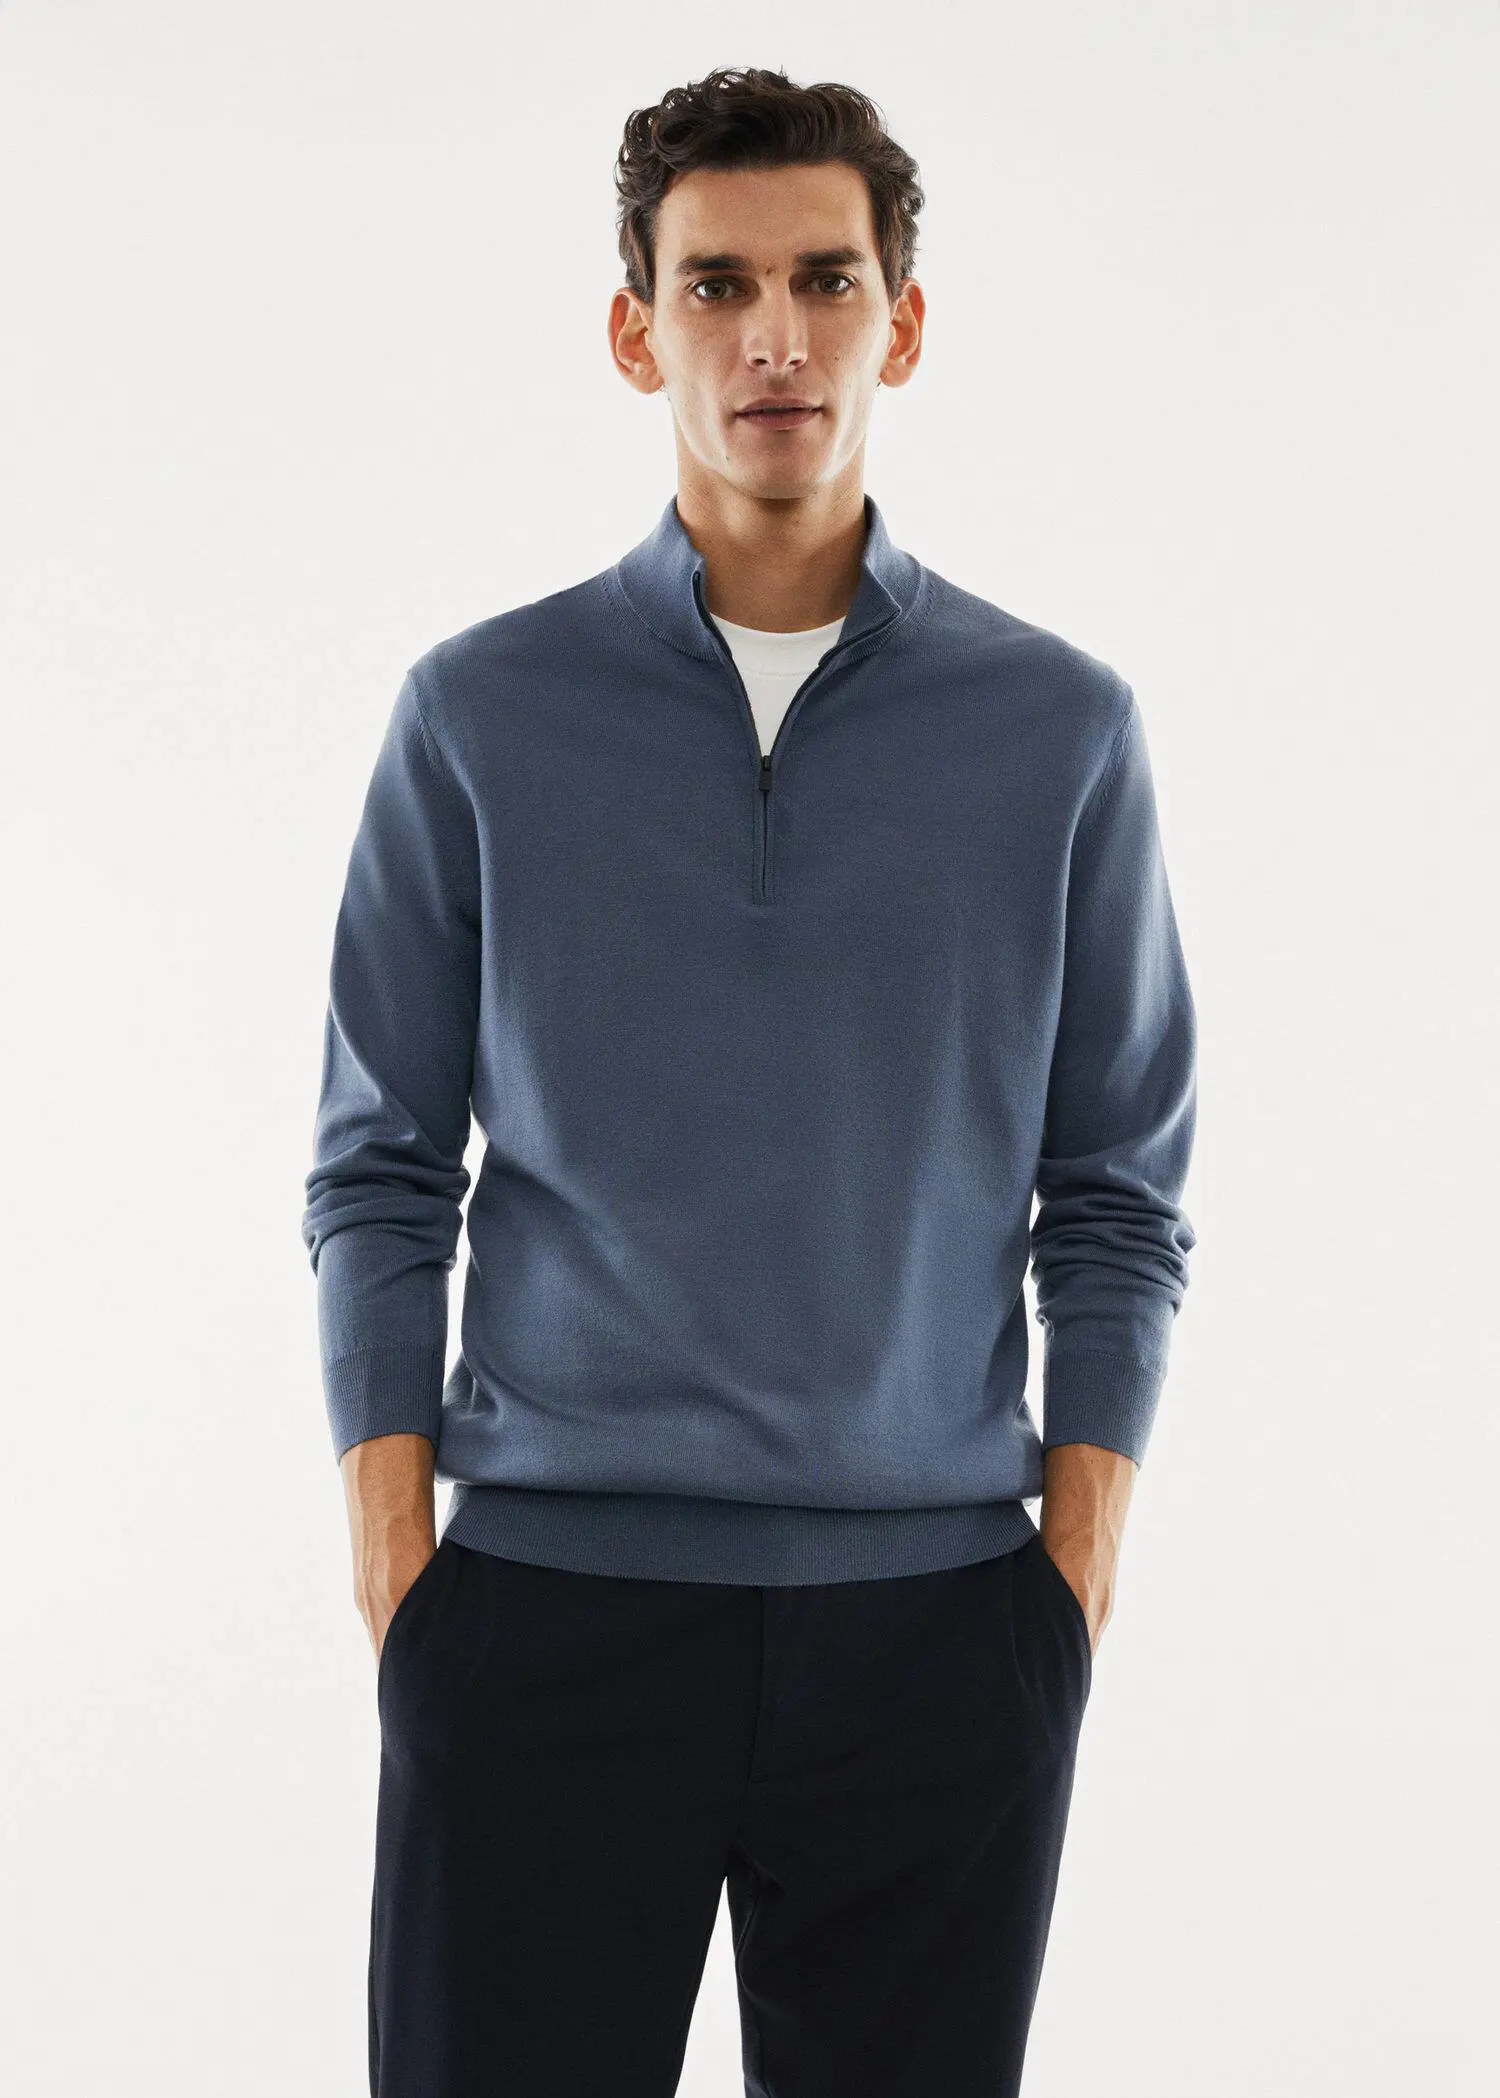 Mango 100% merino wool sweater with zipper collar. 1